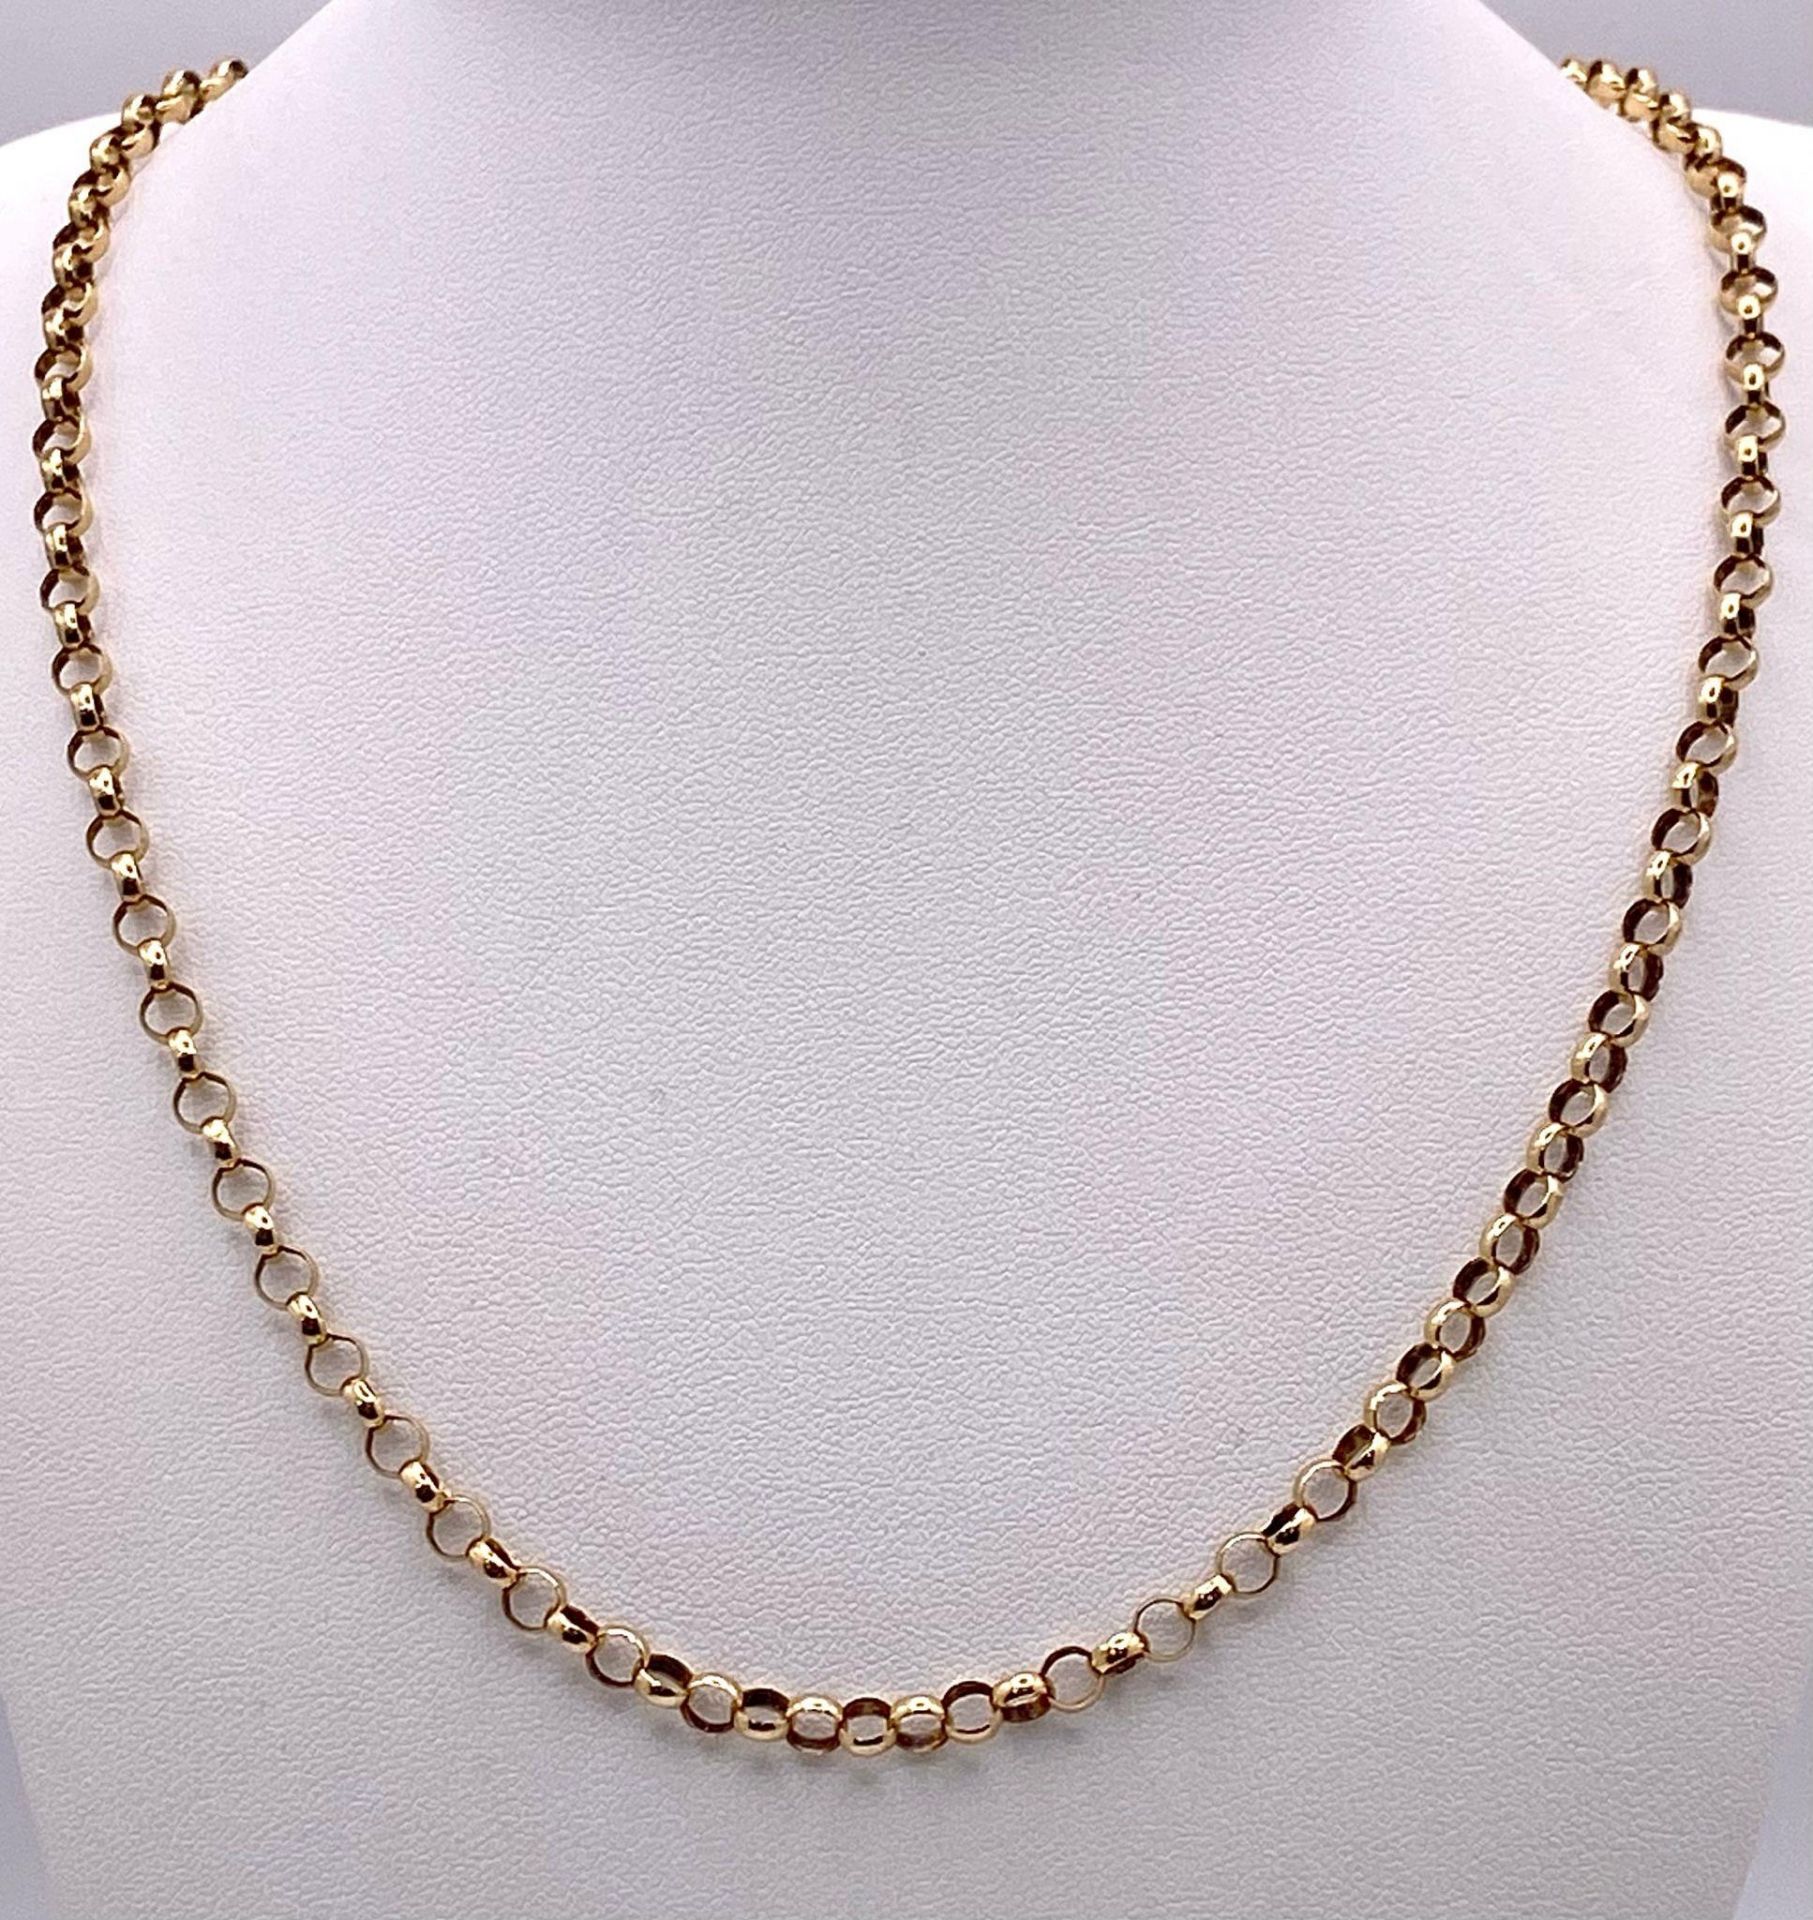 A 14K Yellow Gold Belcher Link Necklace. 52cm length. 11.66g weight.